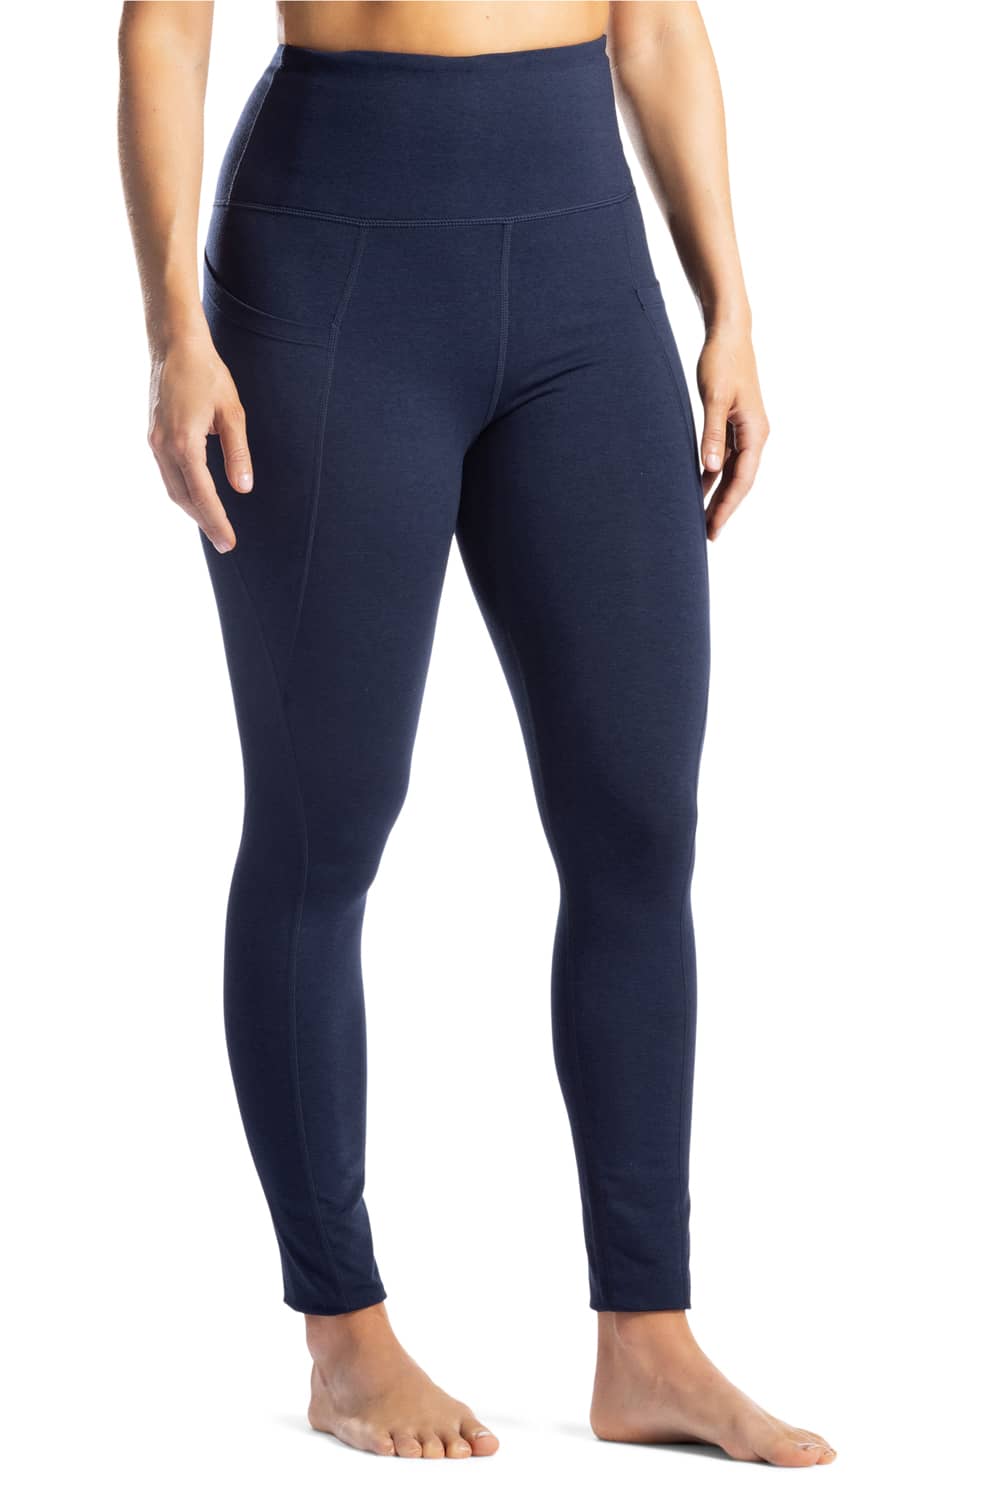 Constantly Varied Gear CVG Womans Leggings Capri XL Extra Large Blue 2  pockets